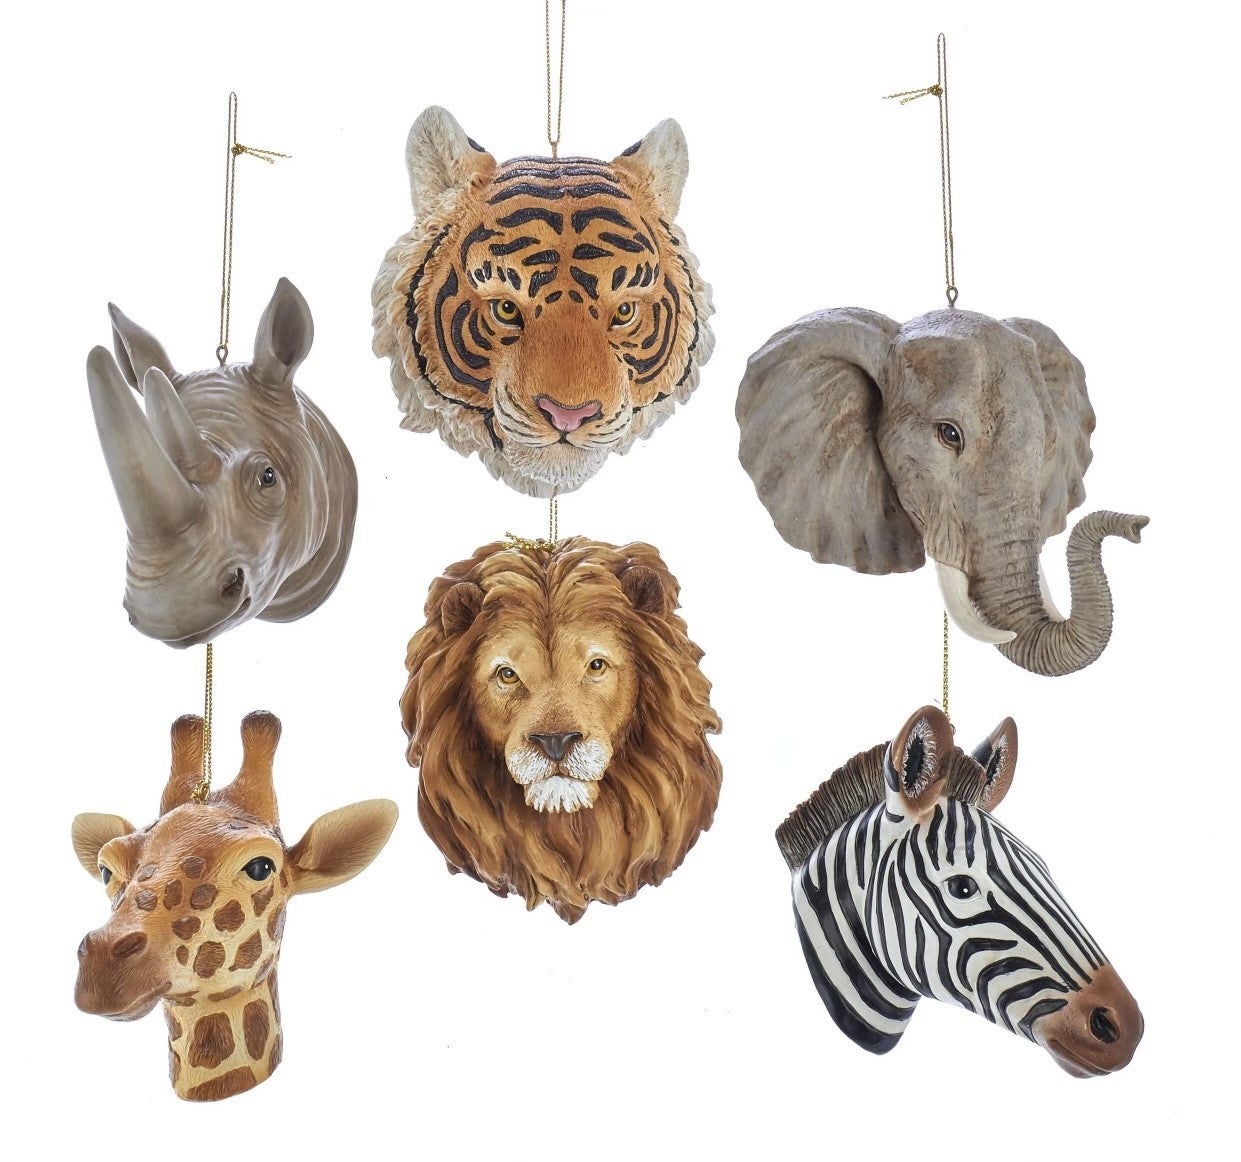 Safari animal ornaments